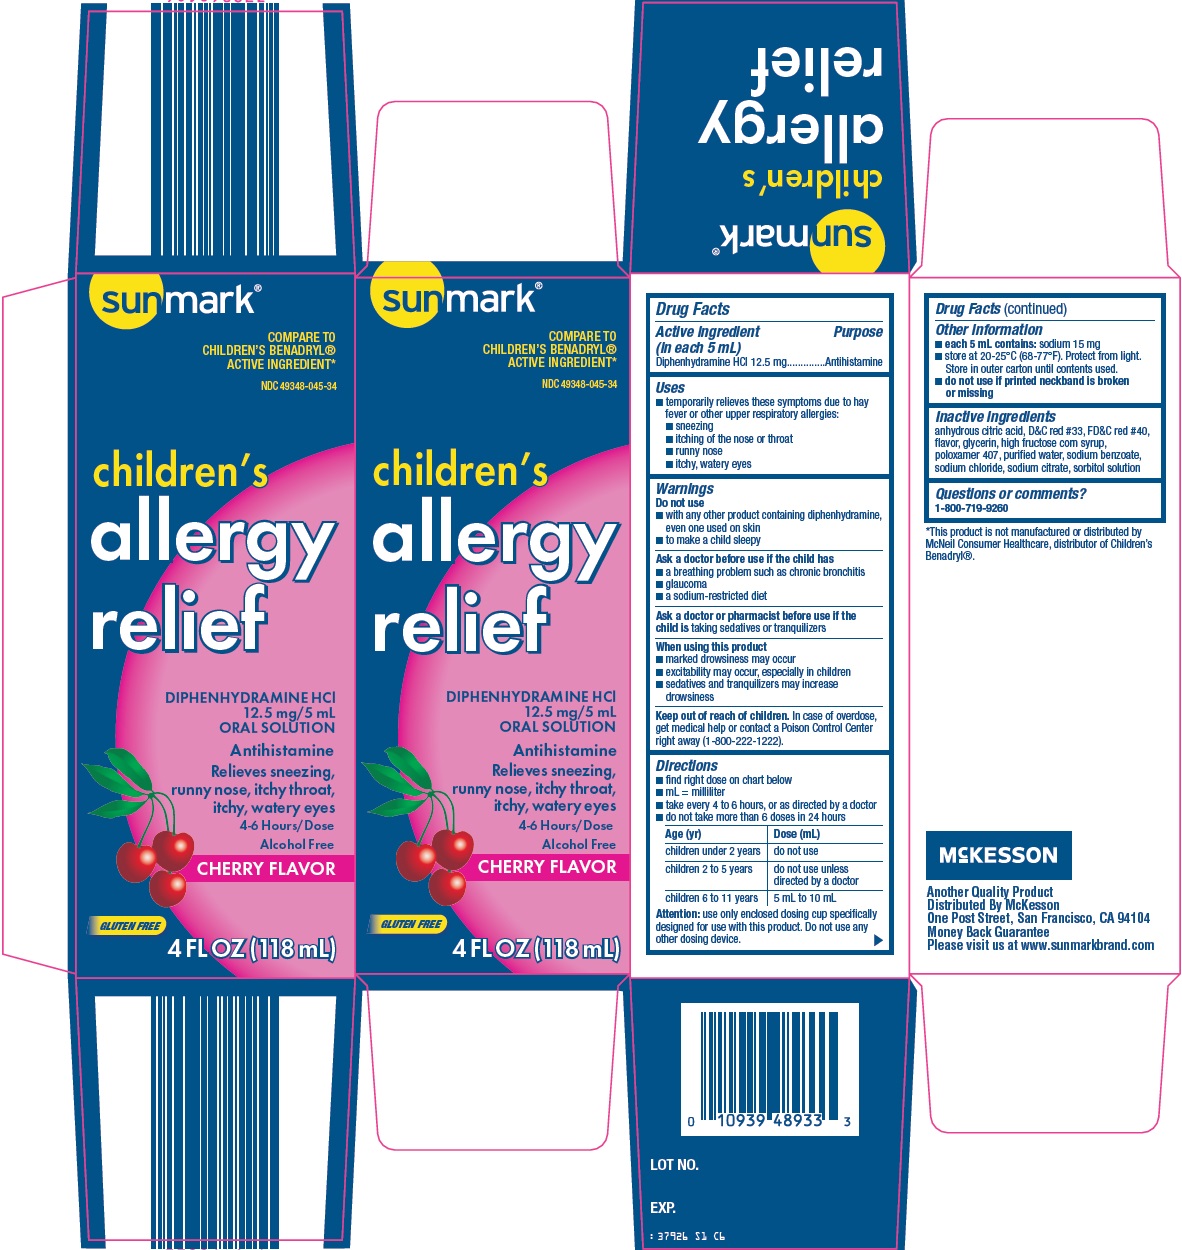 Sunmark Children's Allergy Relief image